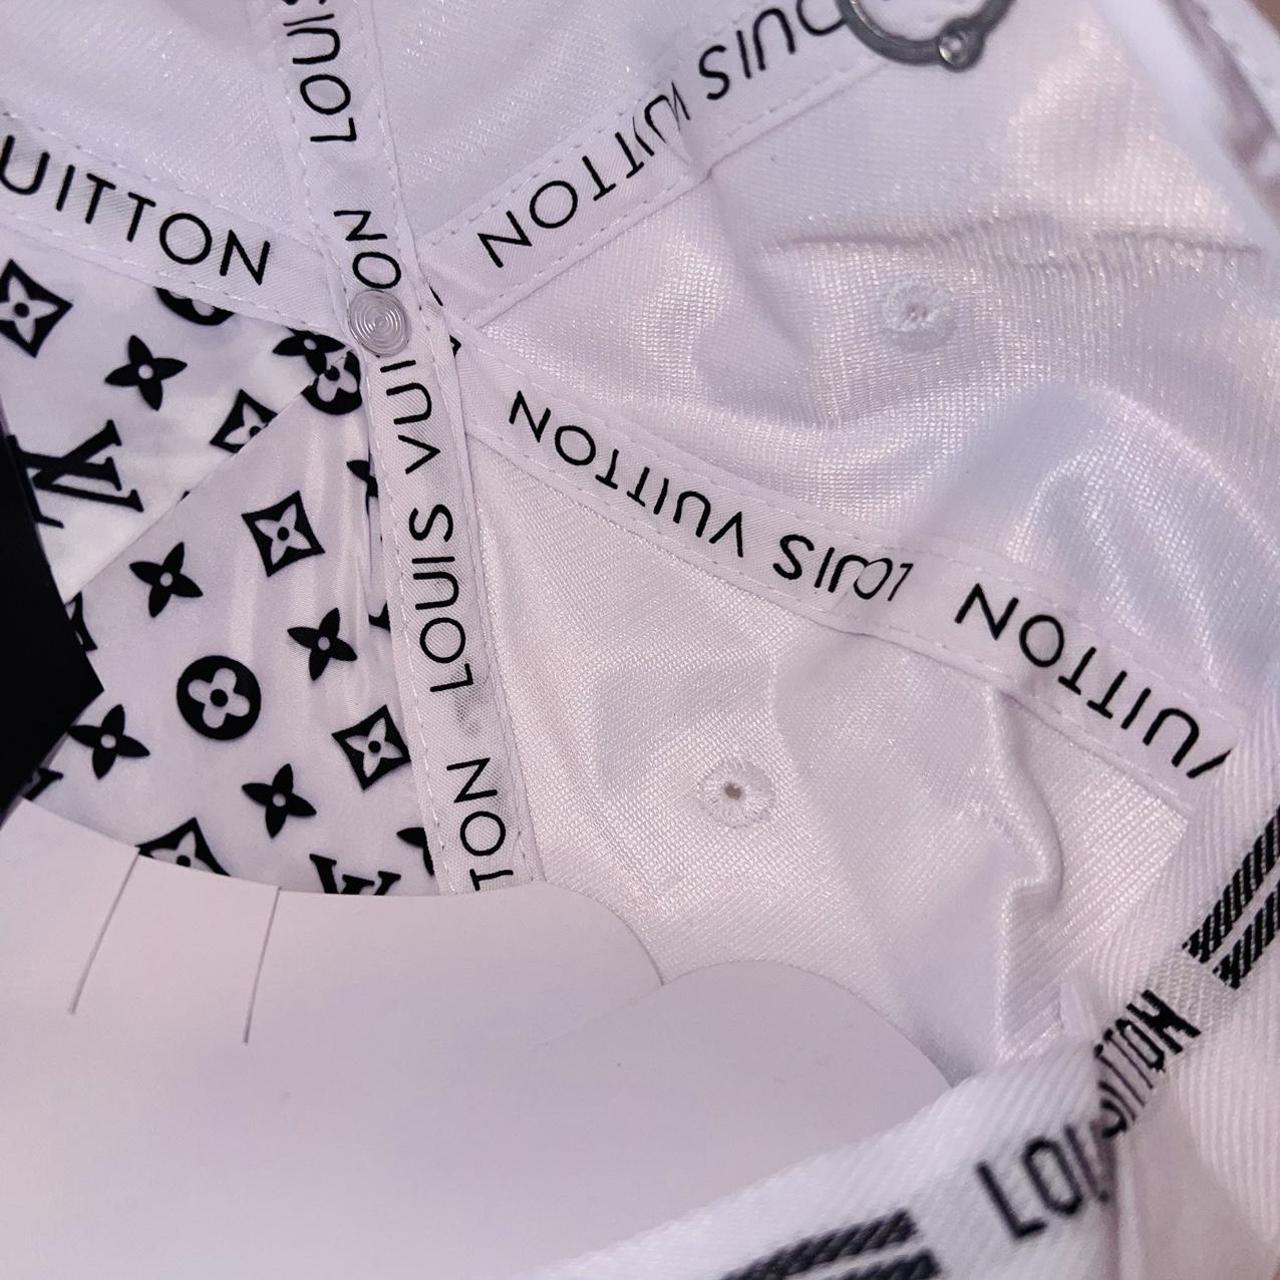 Louis Vuitton hat message before buying - Depop